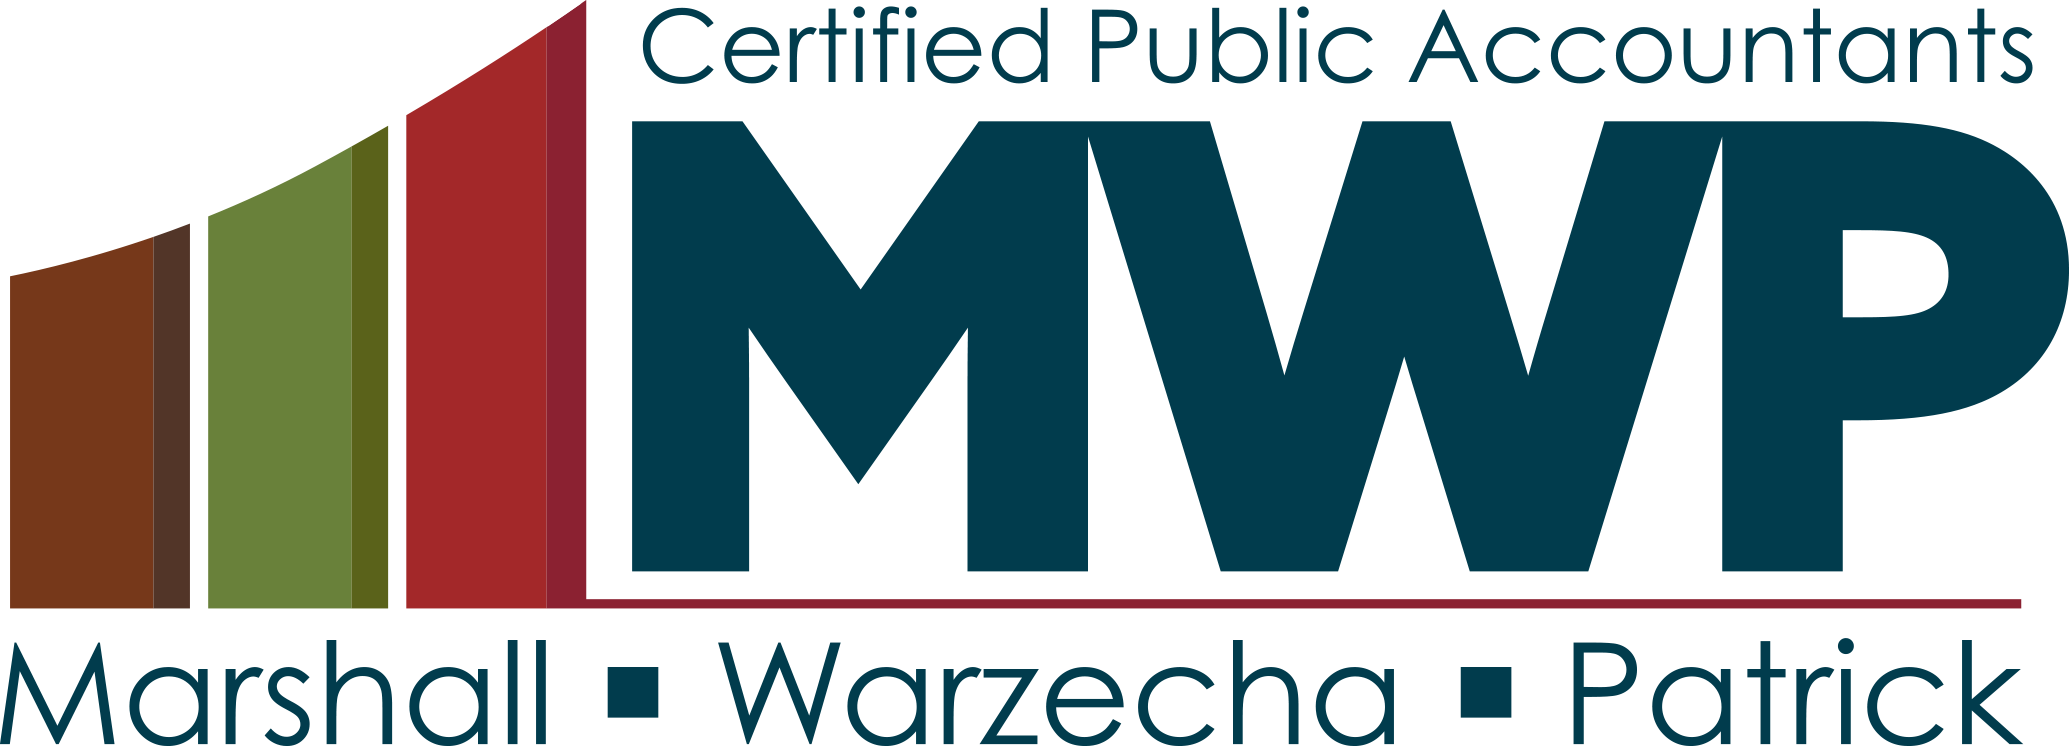 Marshall, Warzecha & Patrick, CPA PLLC's Logo